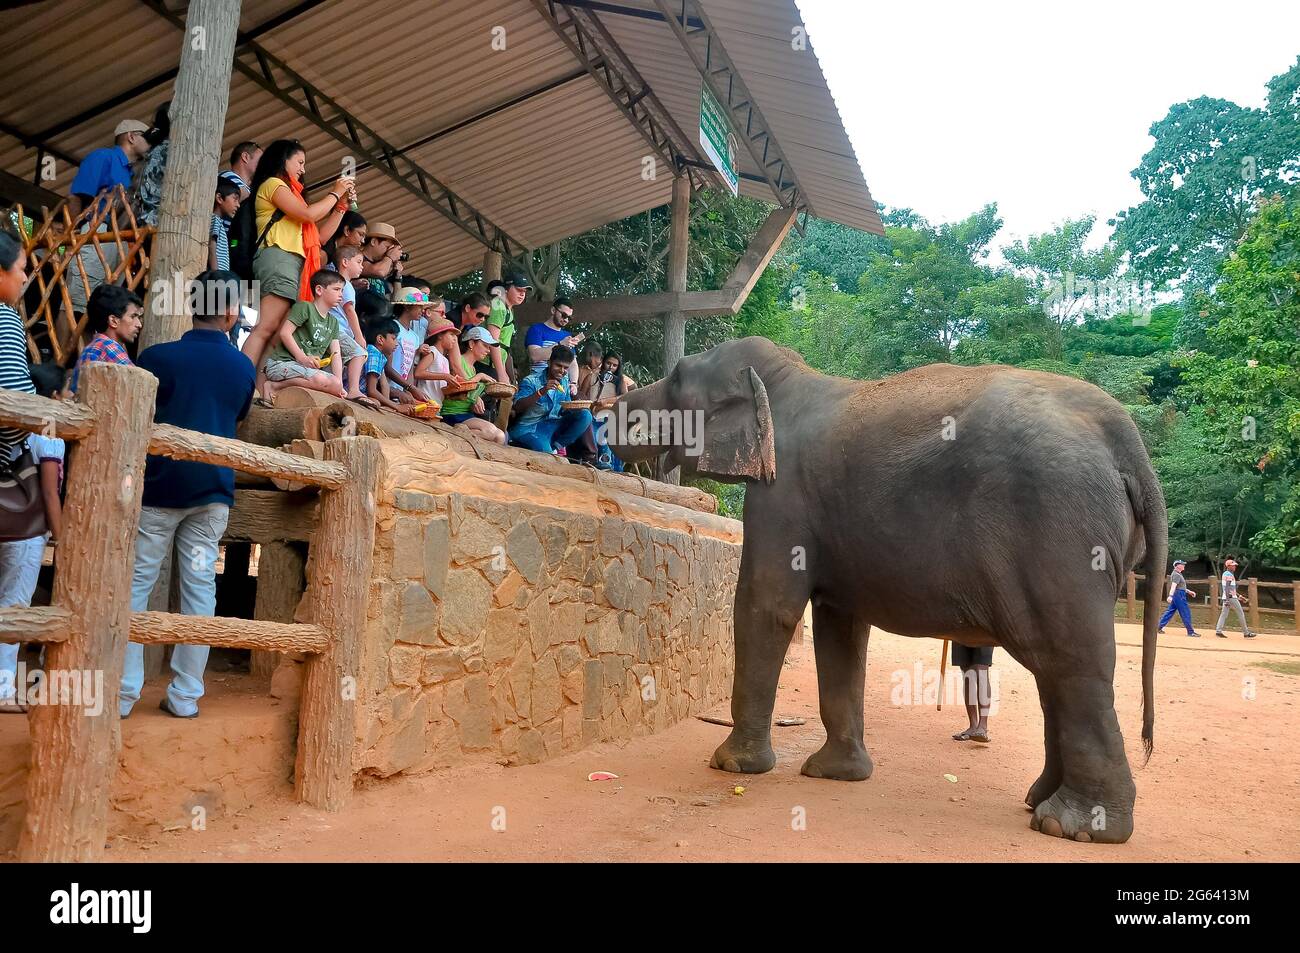 26. August 2016 - pinnawala, sri lanka. Ein Tourist gibt die Lebensmittel an Elefanten in pinnawala Elefanten Waisenhaus, srilanka Stockfoto